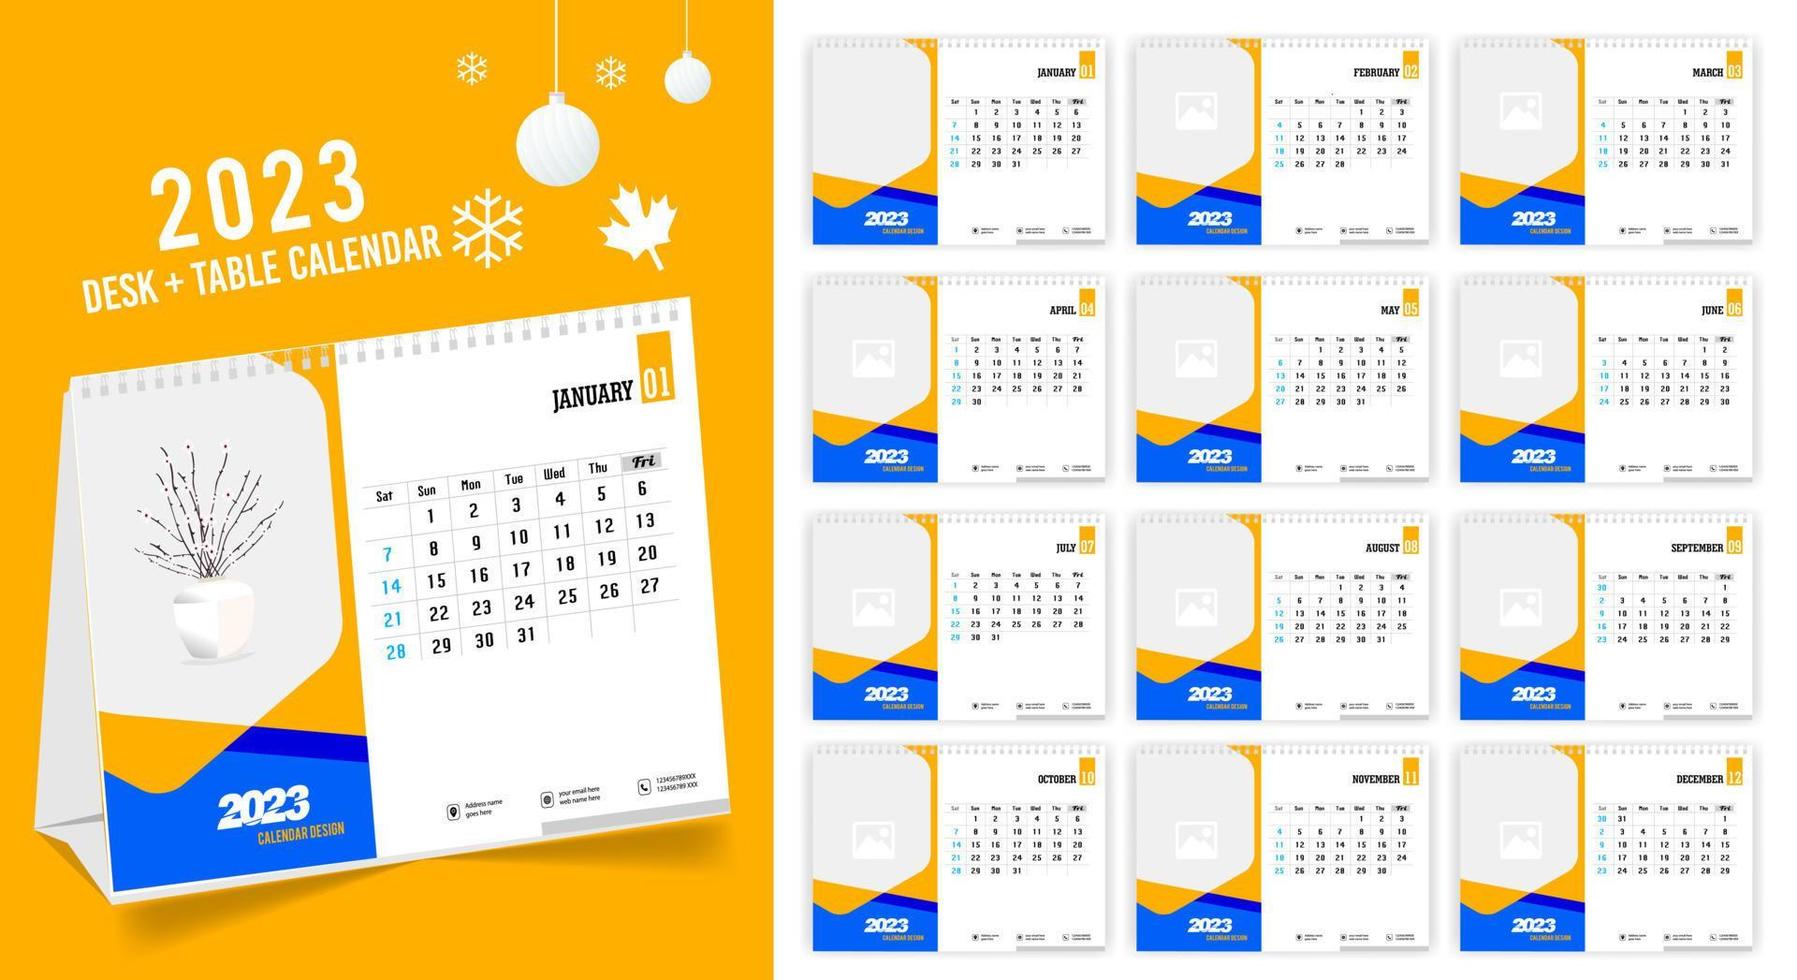 Desk Calendar 2023 Creative design, Simple monthly vertical date Layout for 2023 year in English. 12 months Calendar templates, Modern Table calendar design. Corporate or business calendar. vector